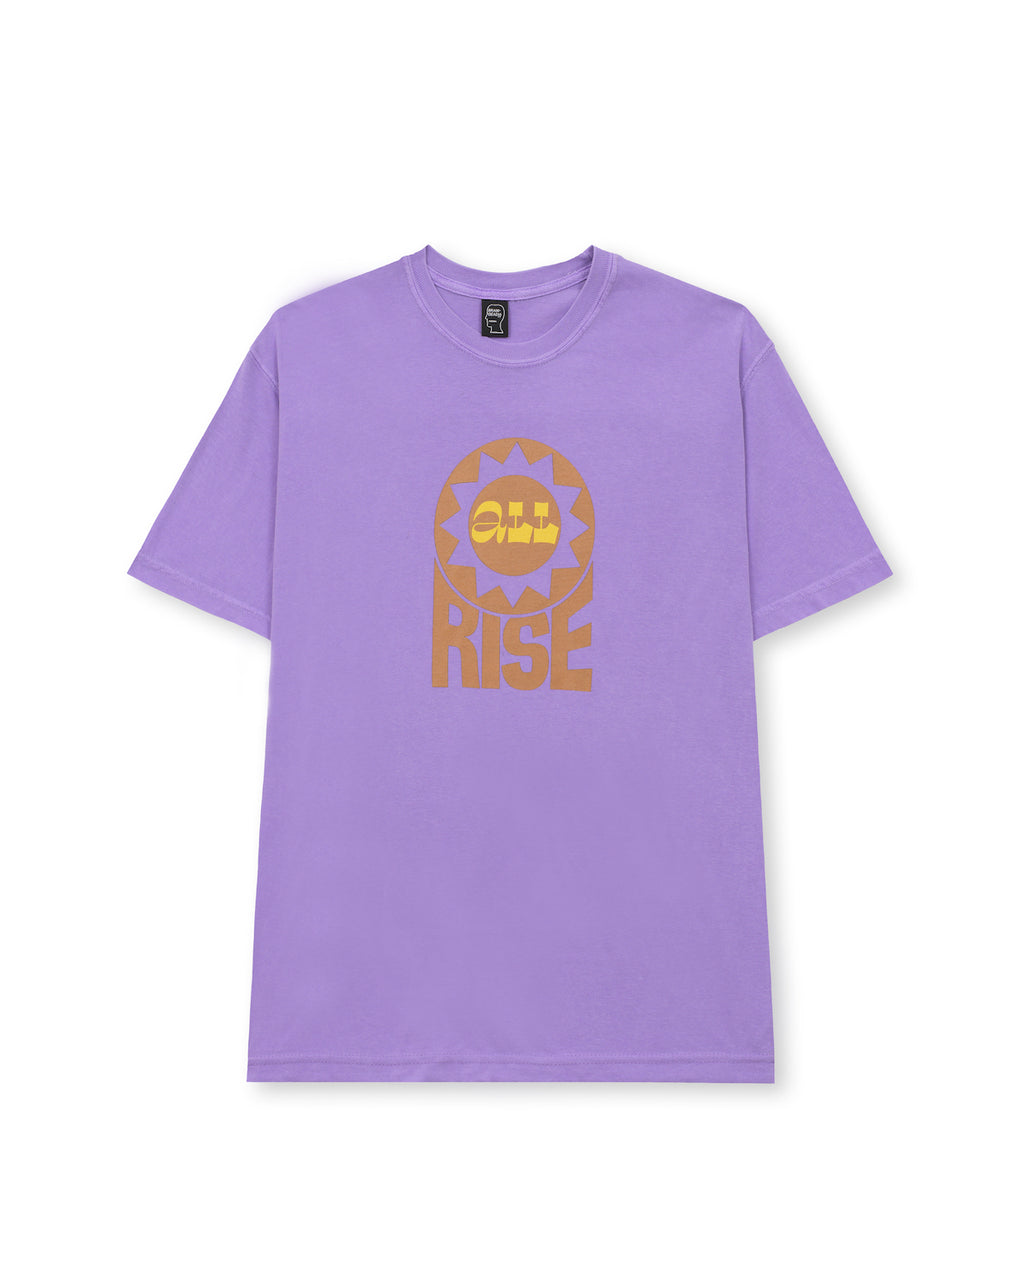 All Rise T-Shirt - Purple 3